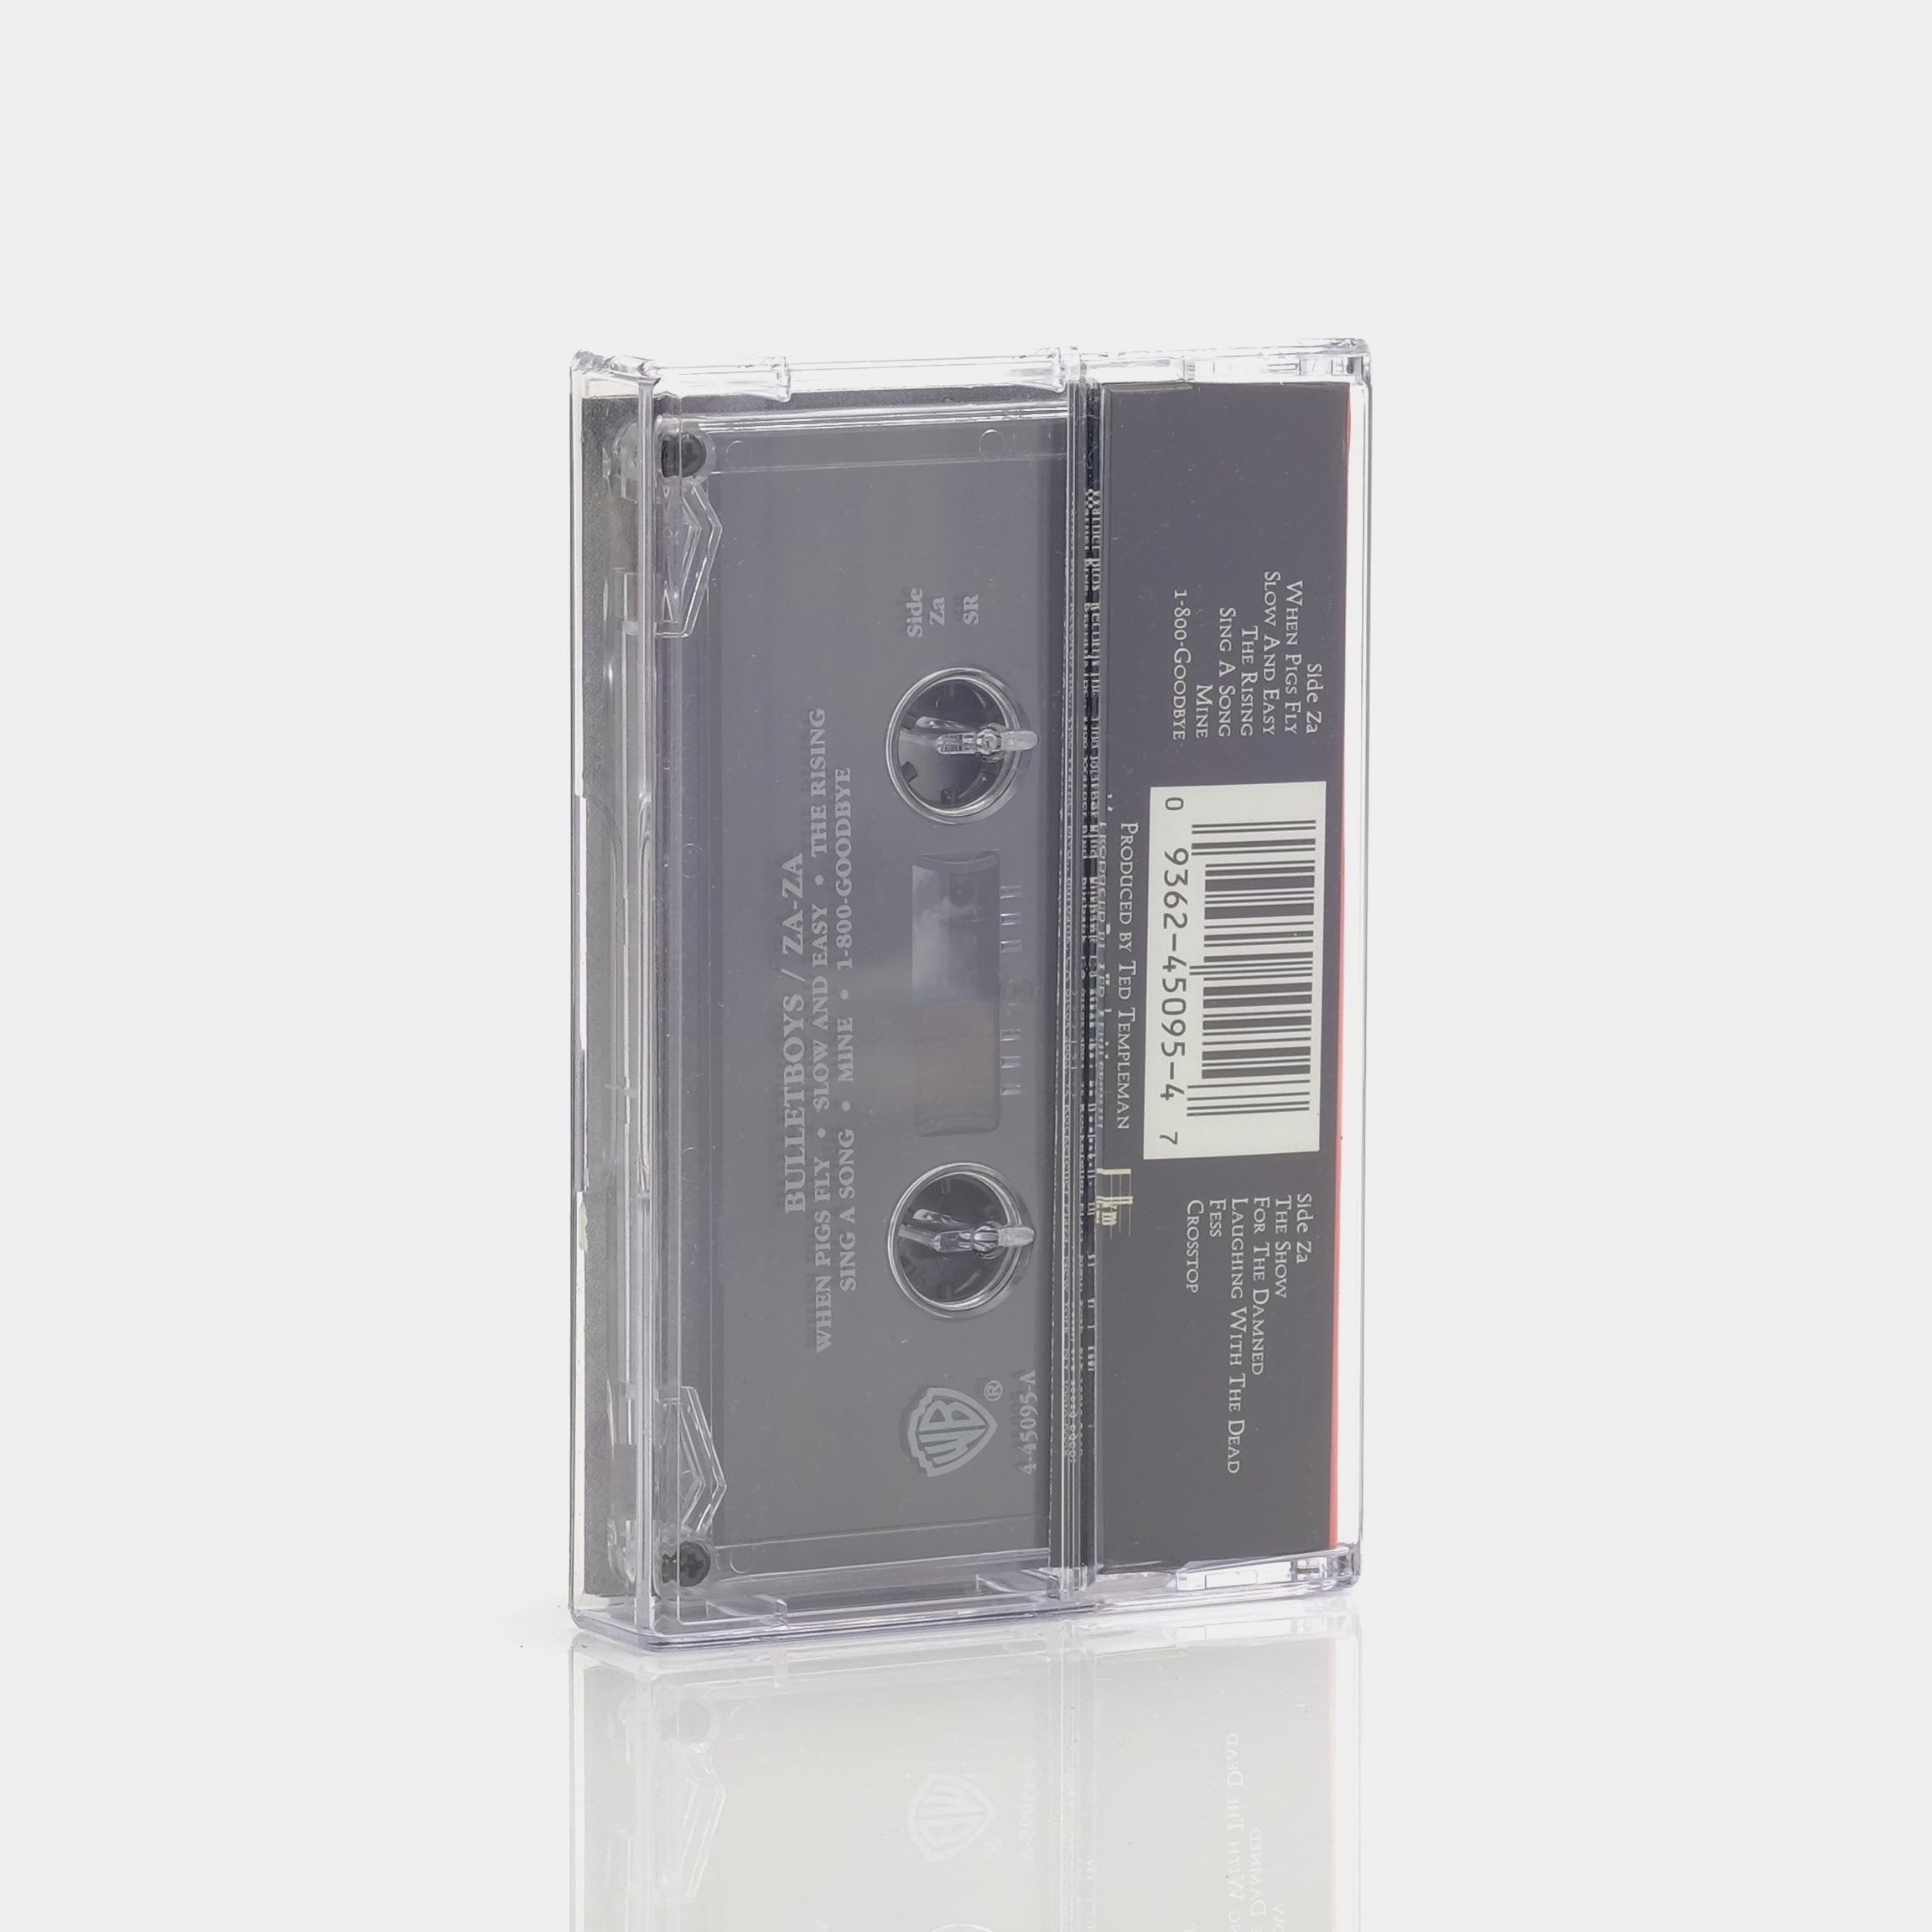 Bullet Boys - Za-Za Cassette Tape